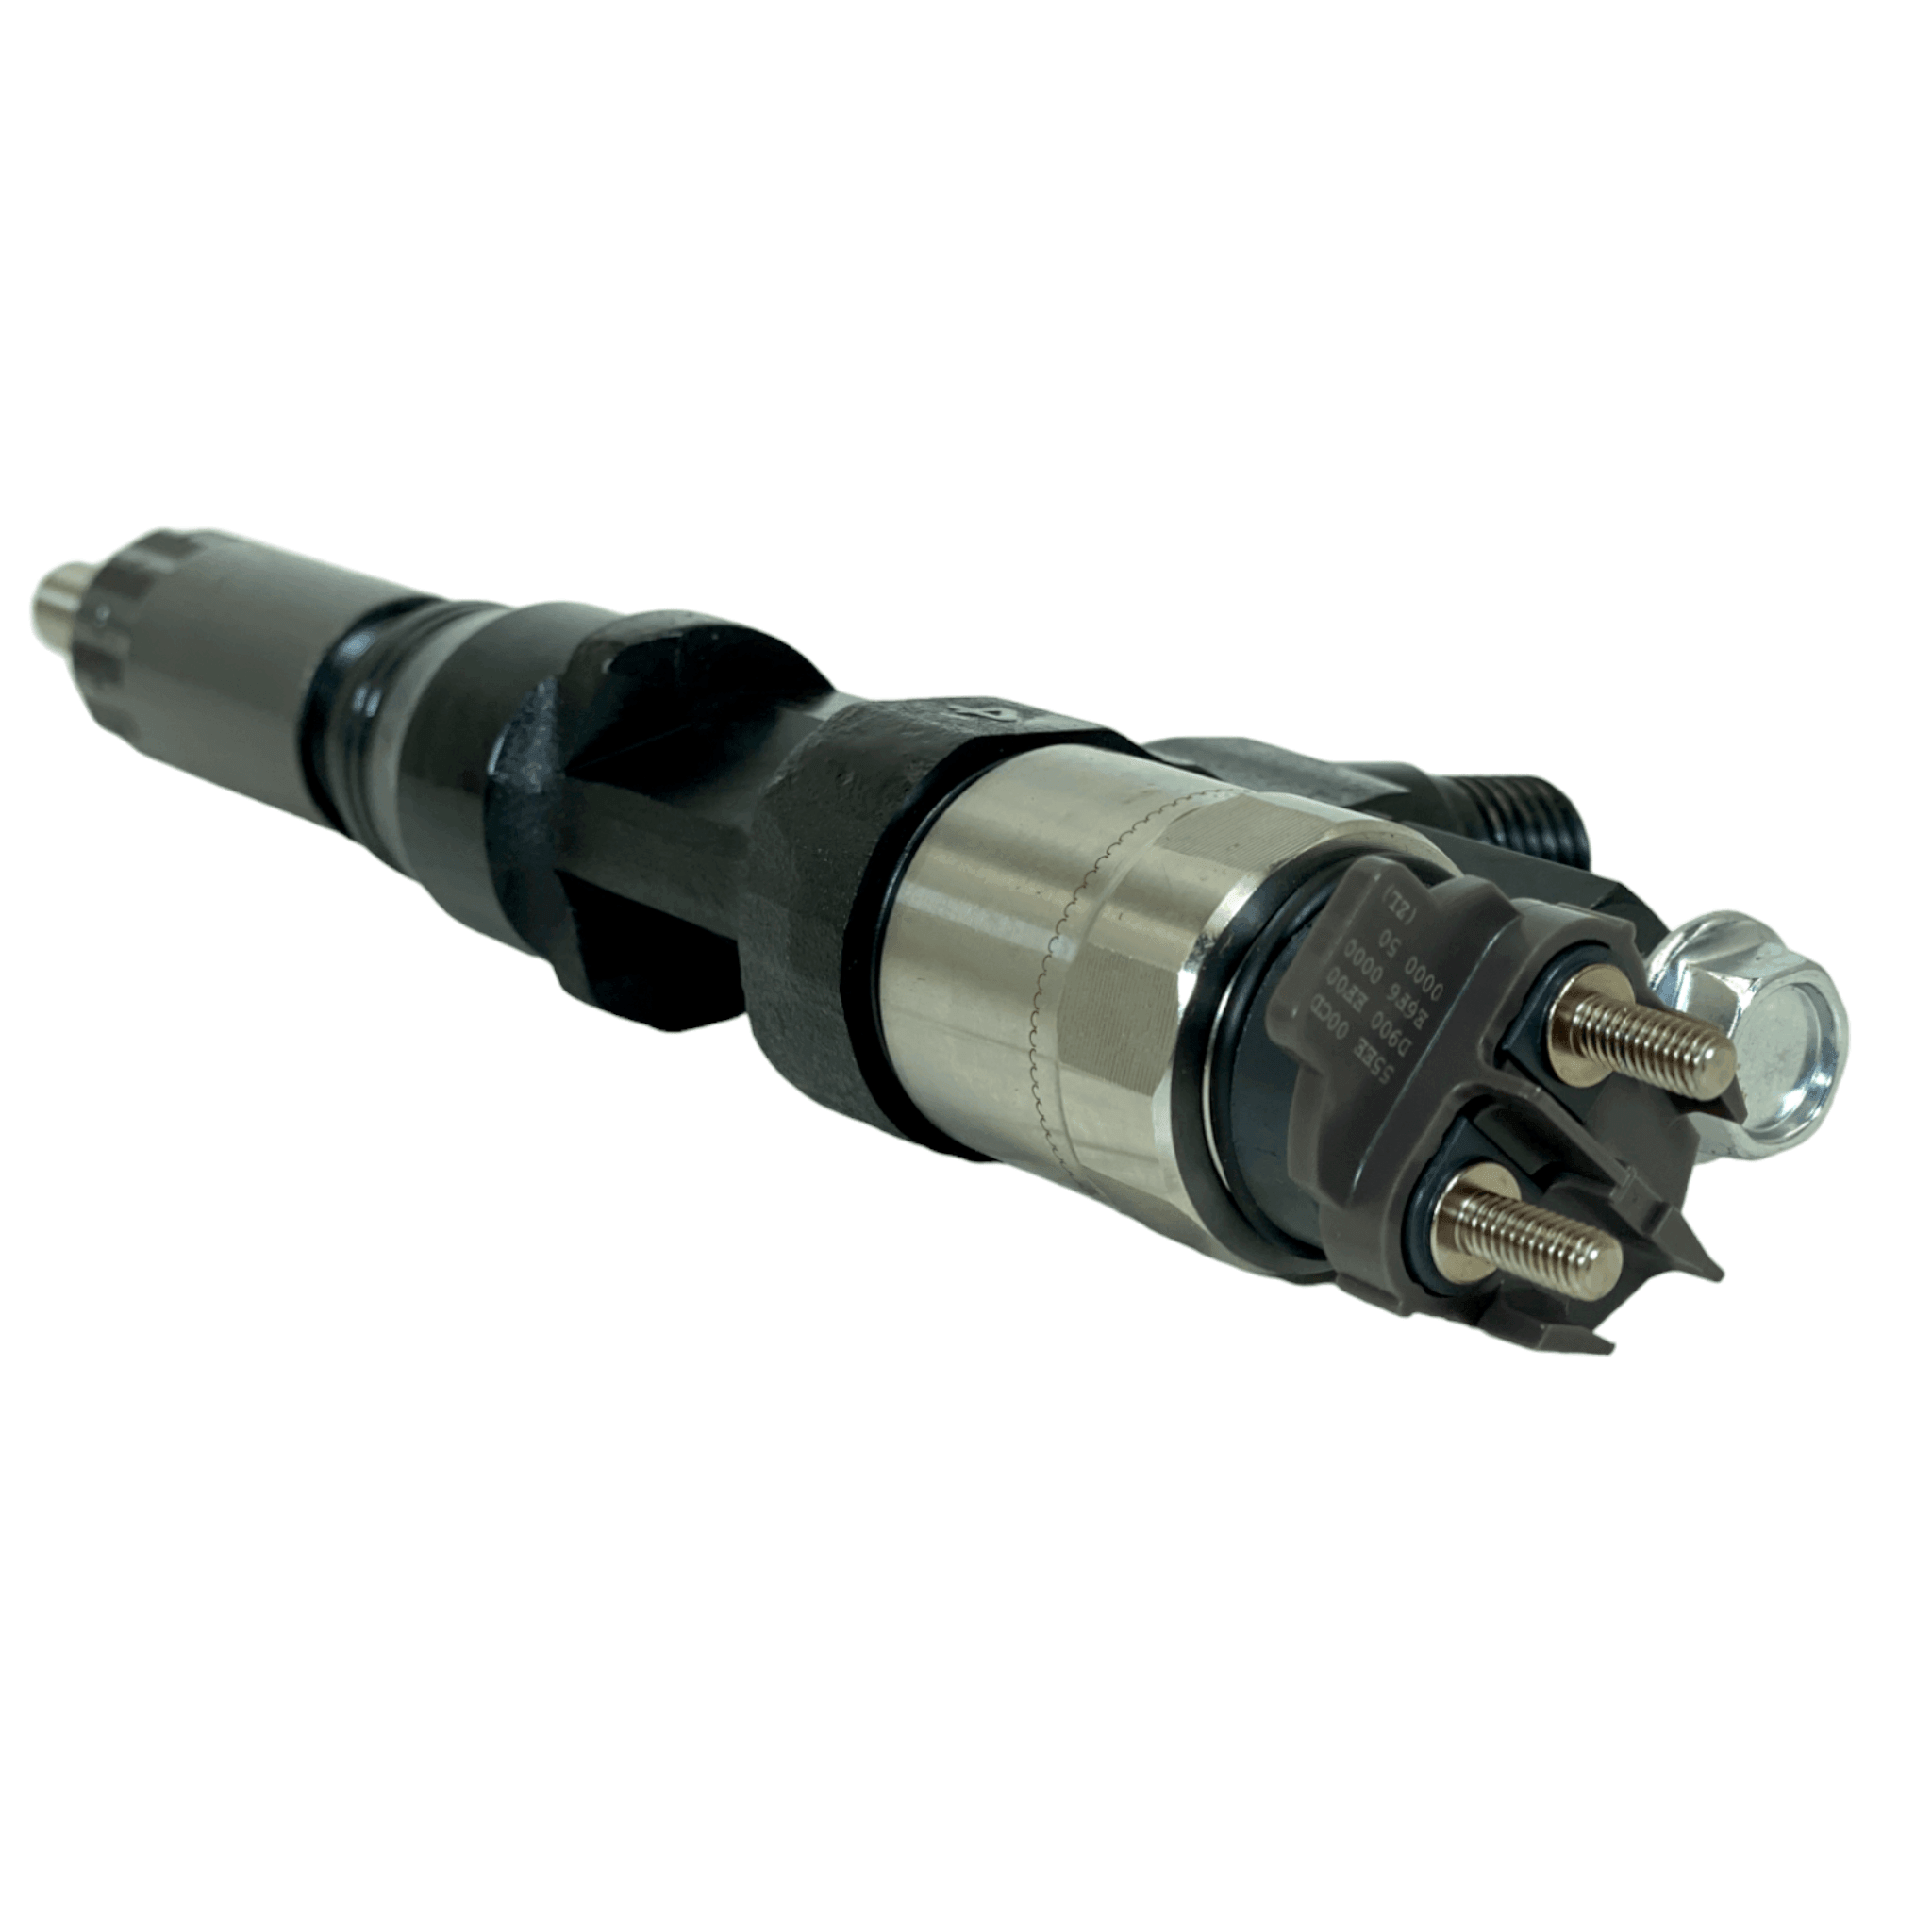 095000-8090 Genuine Hino Fuel Injector - ADVANCED TRUCK PARTS